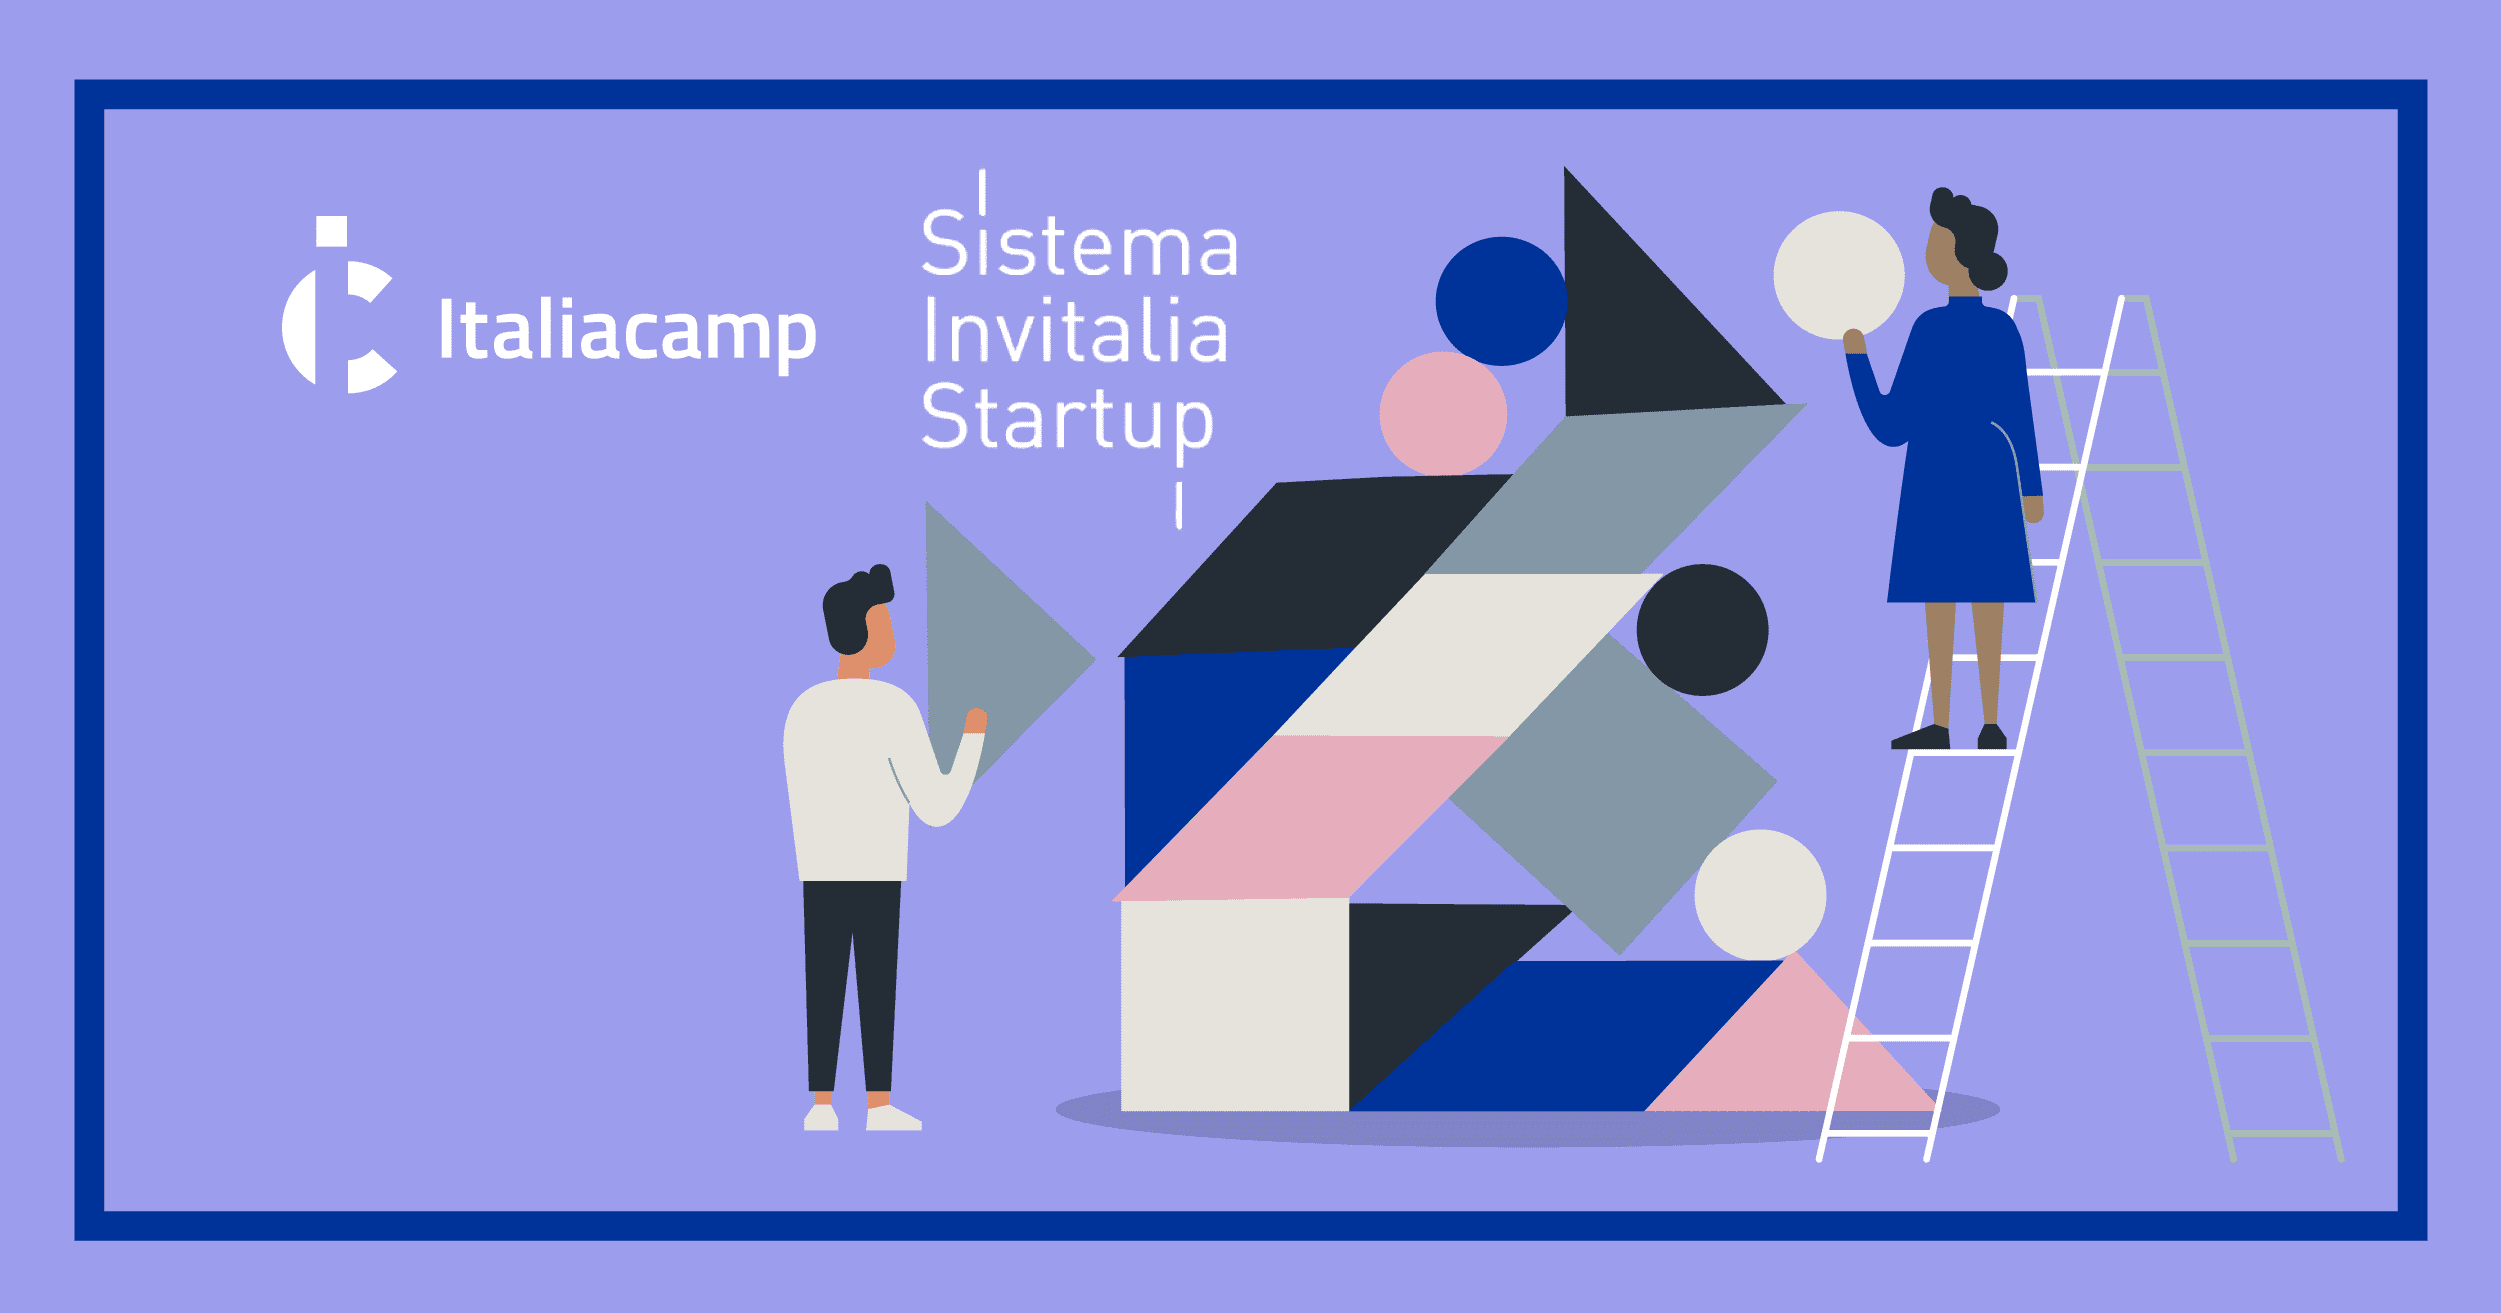 Italiacamp sistema invitalia startup